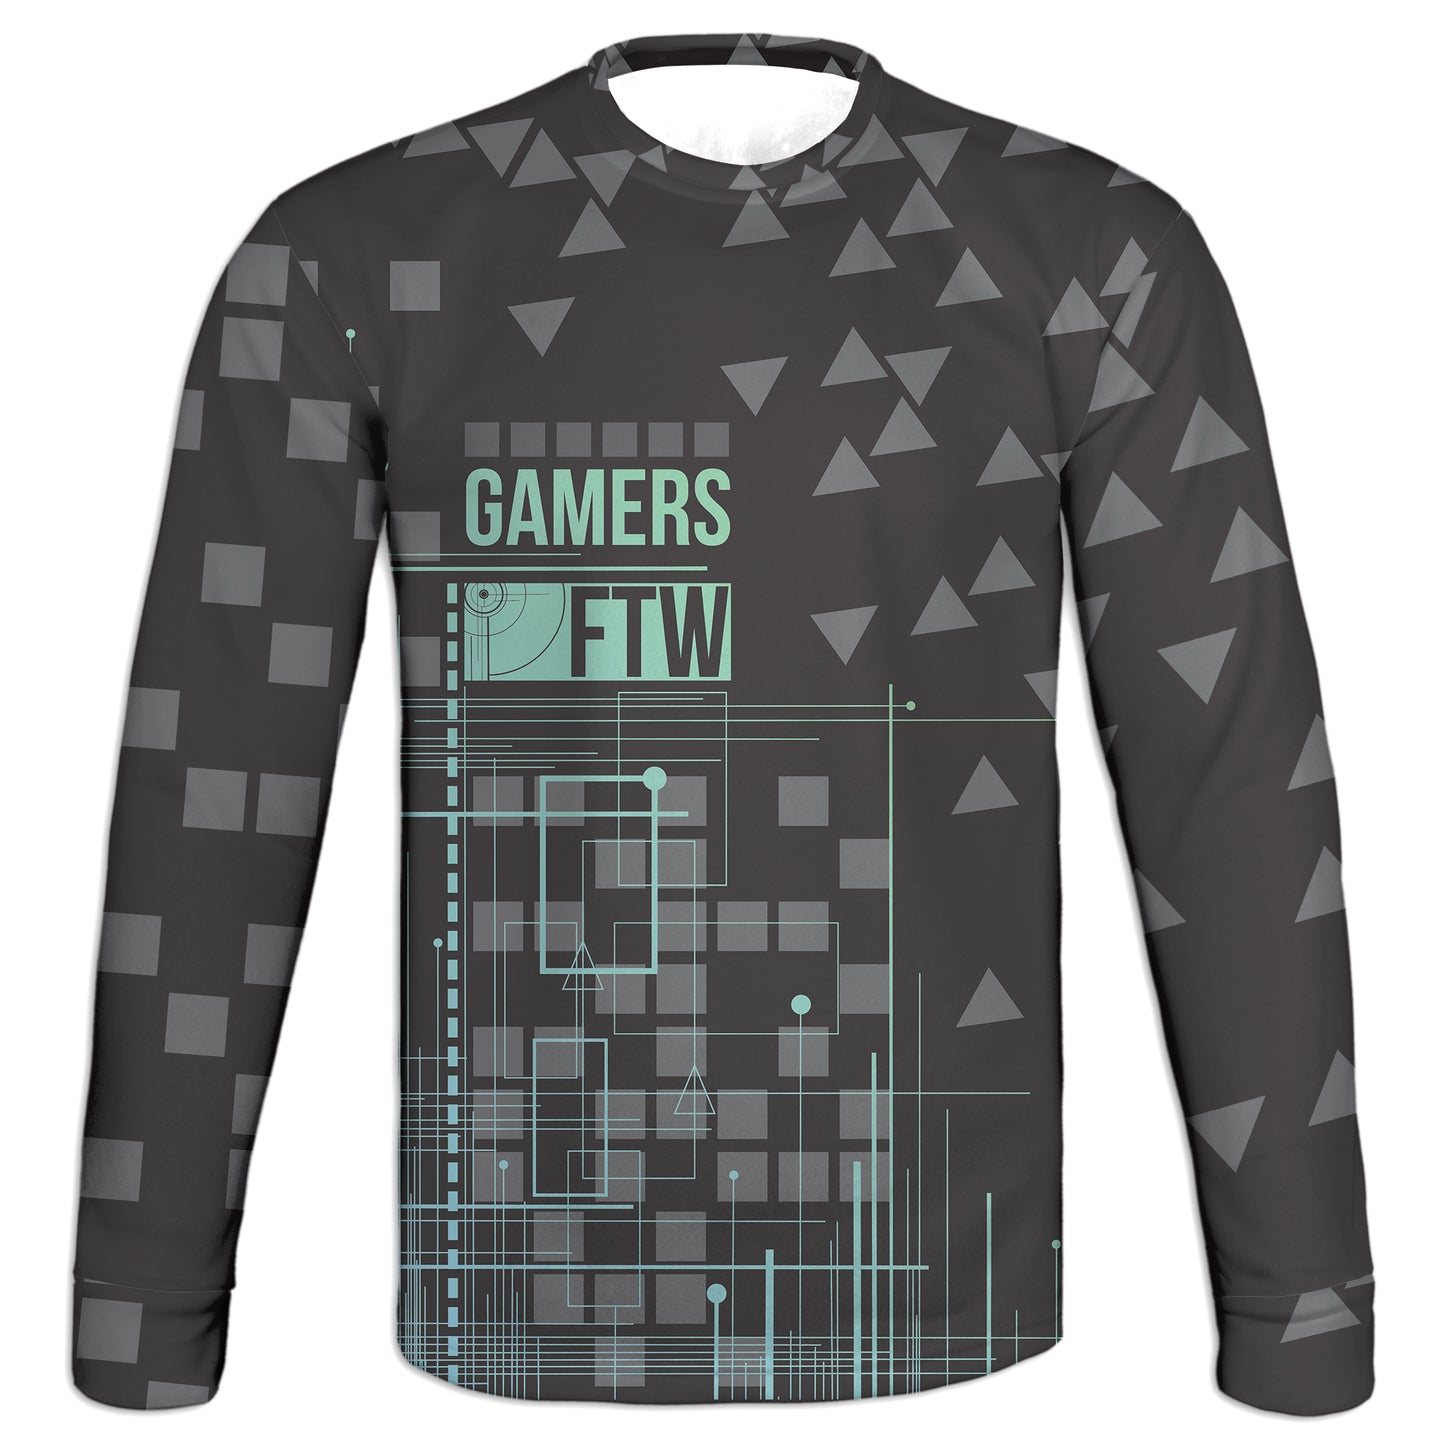 Gamer FTW Sweater